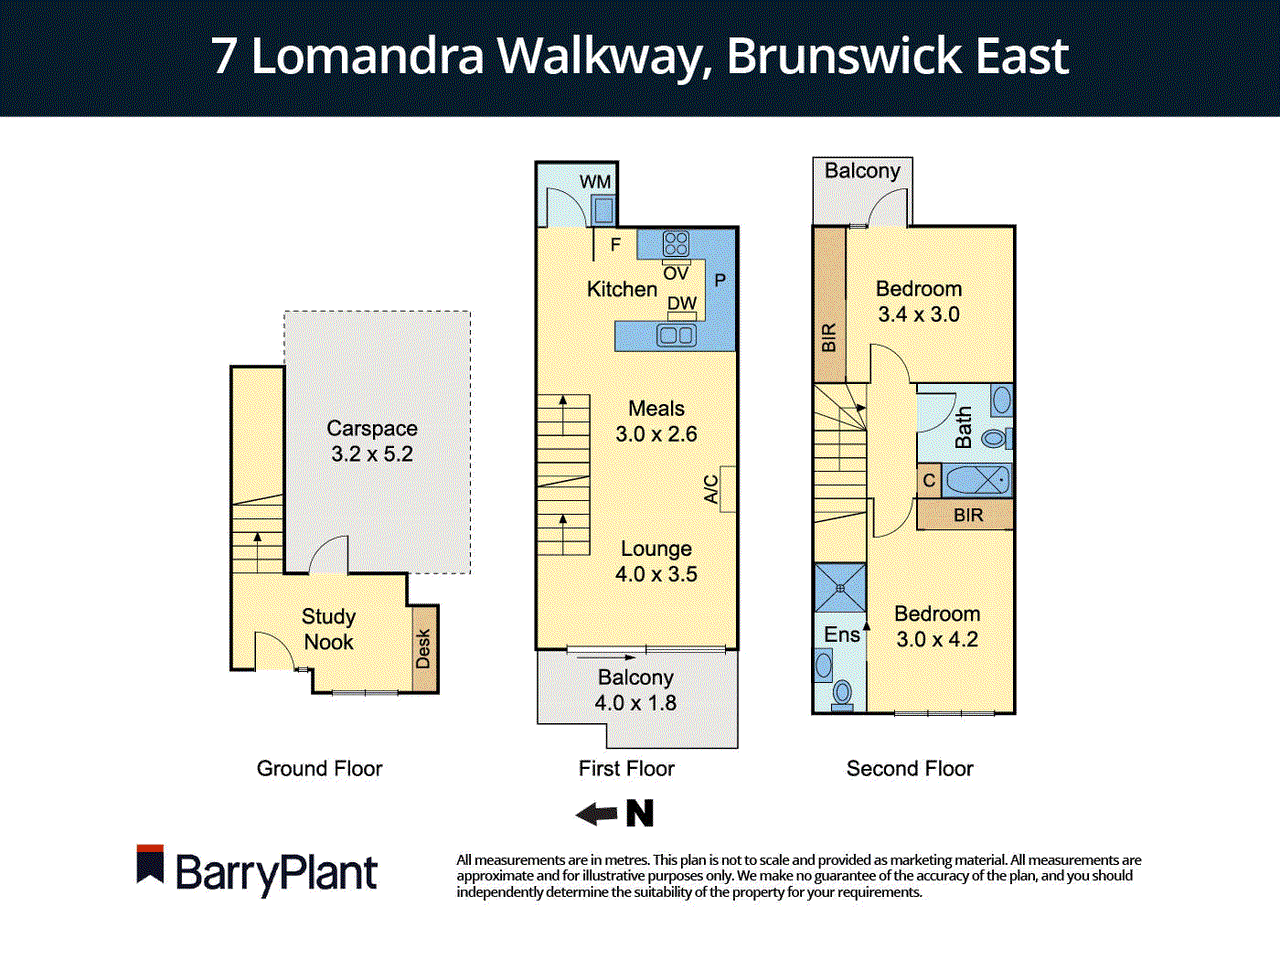 7 Lomandra Walk Way, Brunswick East, VIC 3057